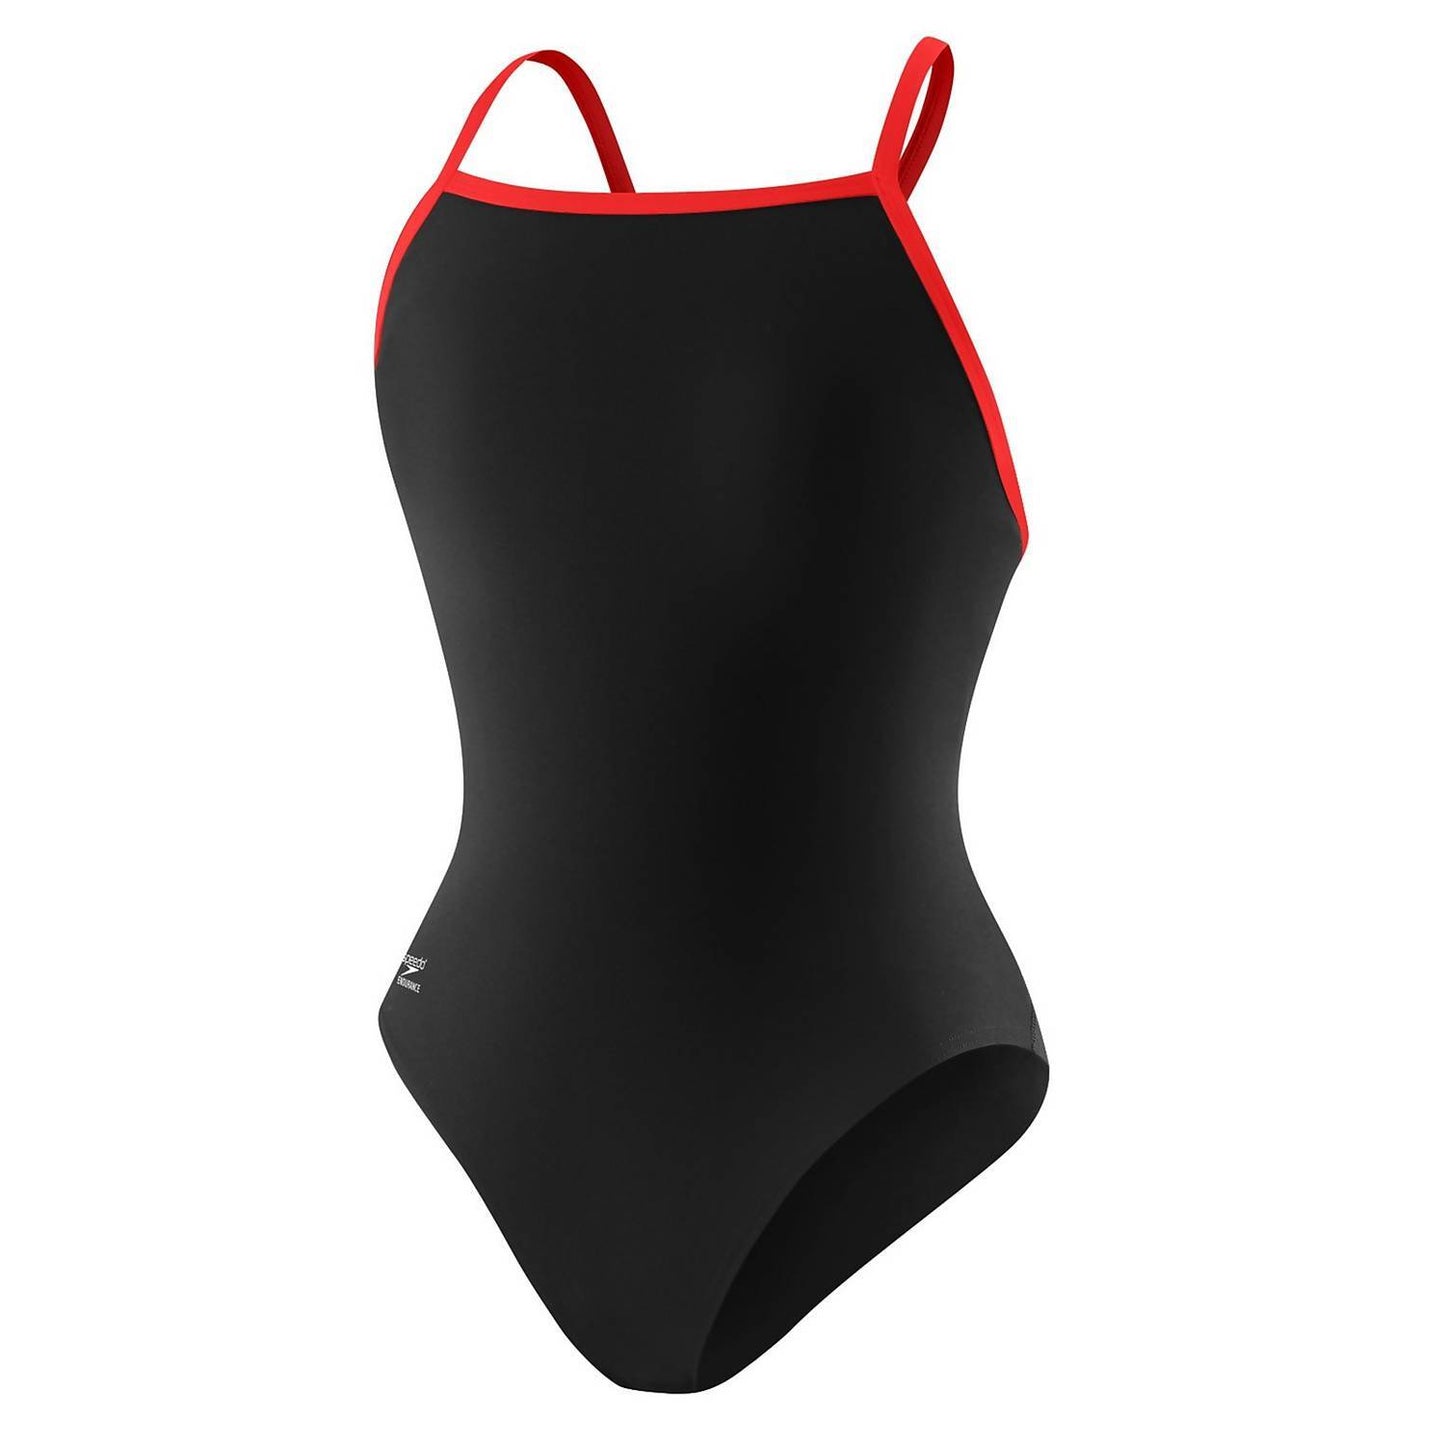 Speedo Women's Black/Red Endurance+ One Piece Swimsuit Size 24